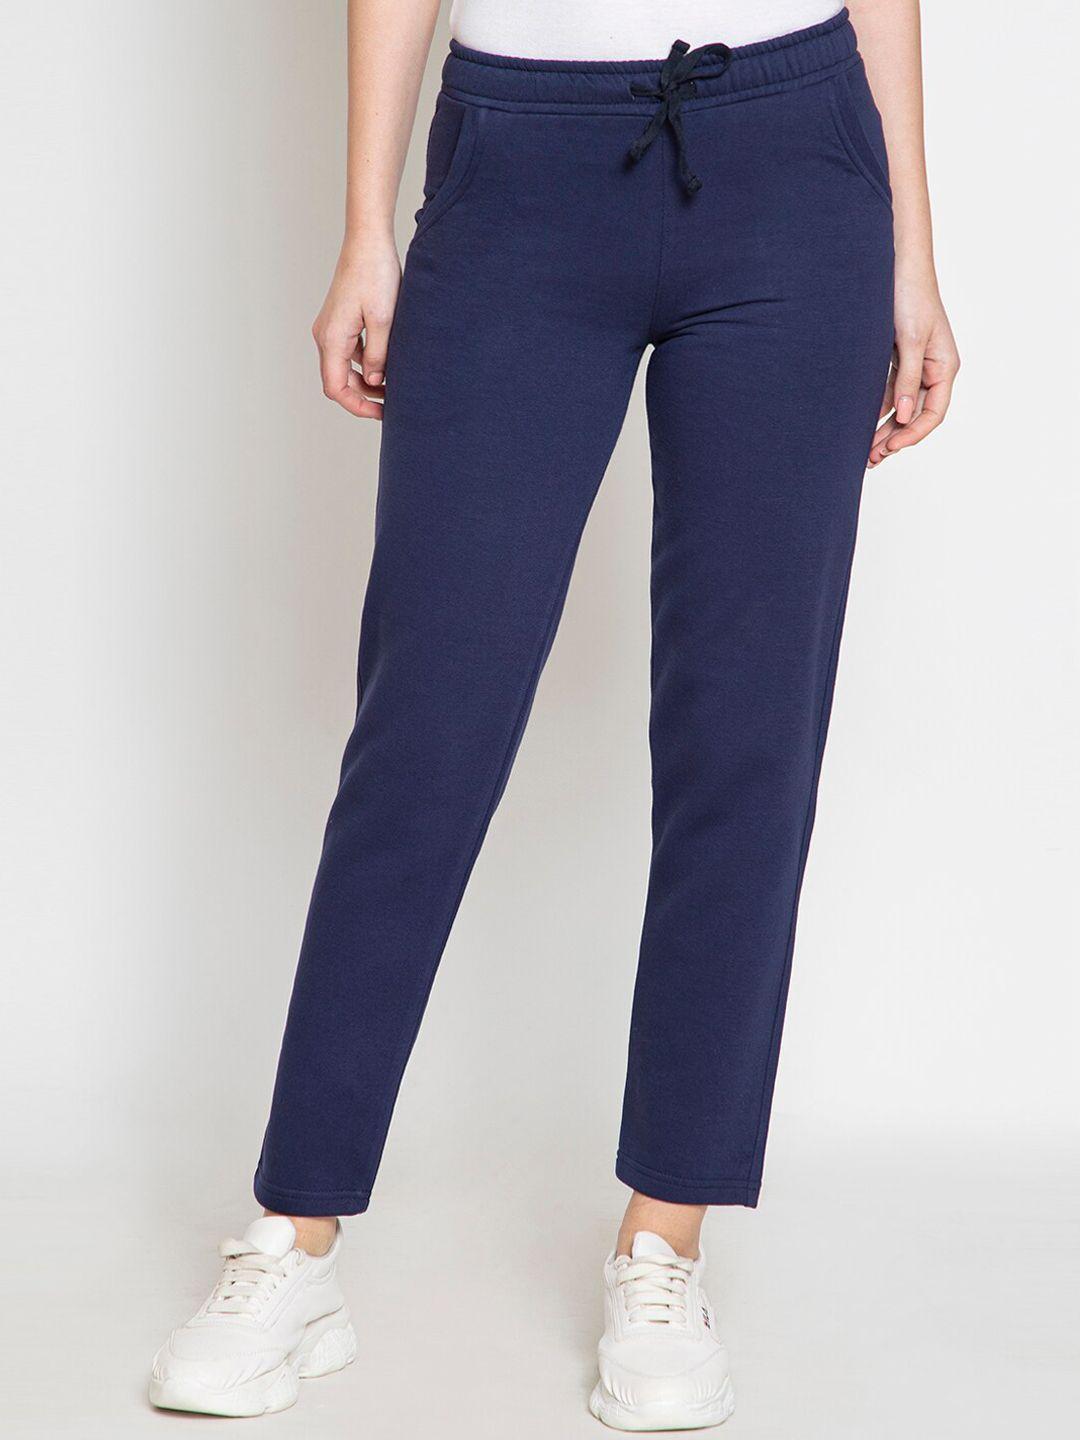 femea women navy blue solid cotton slim-fit track pants